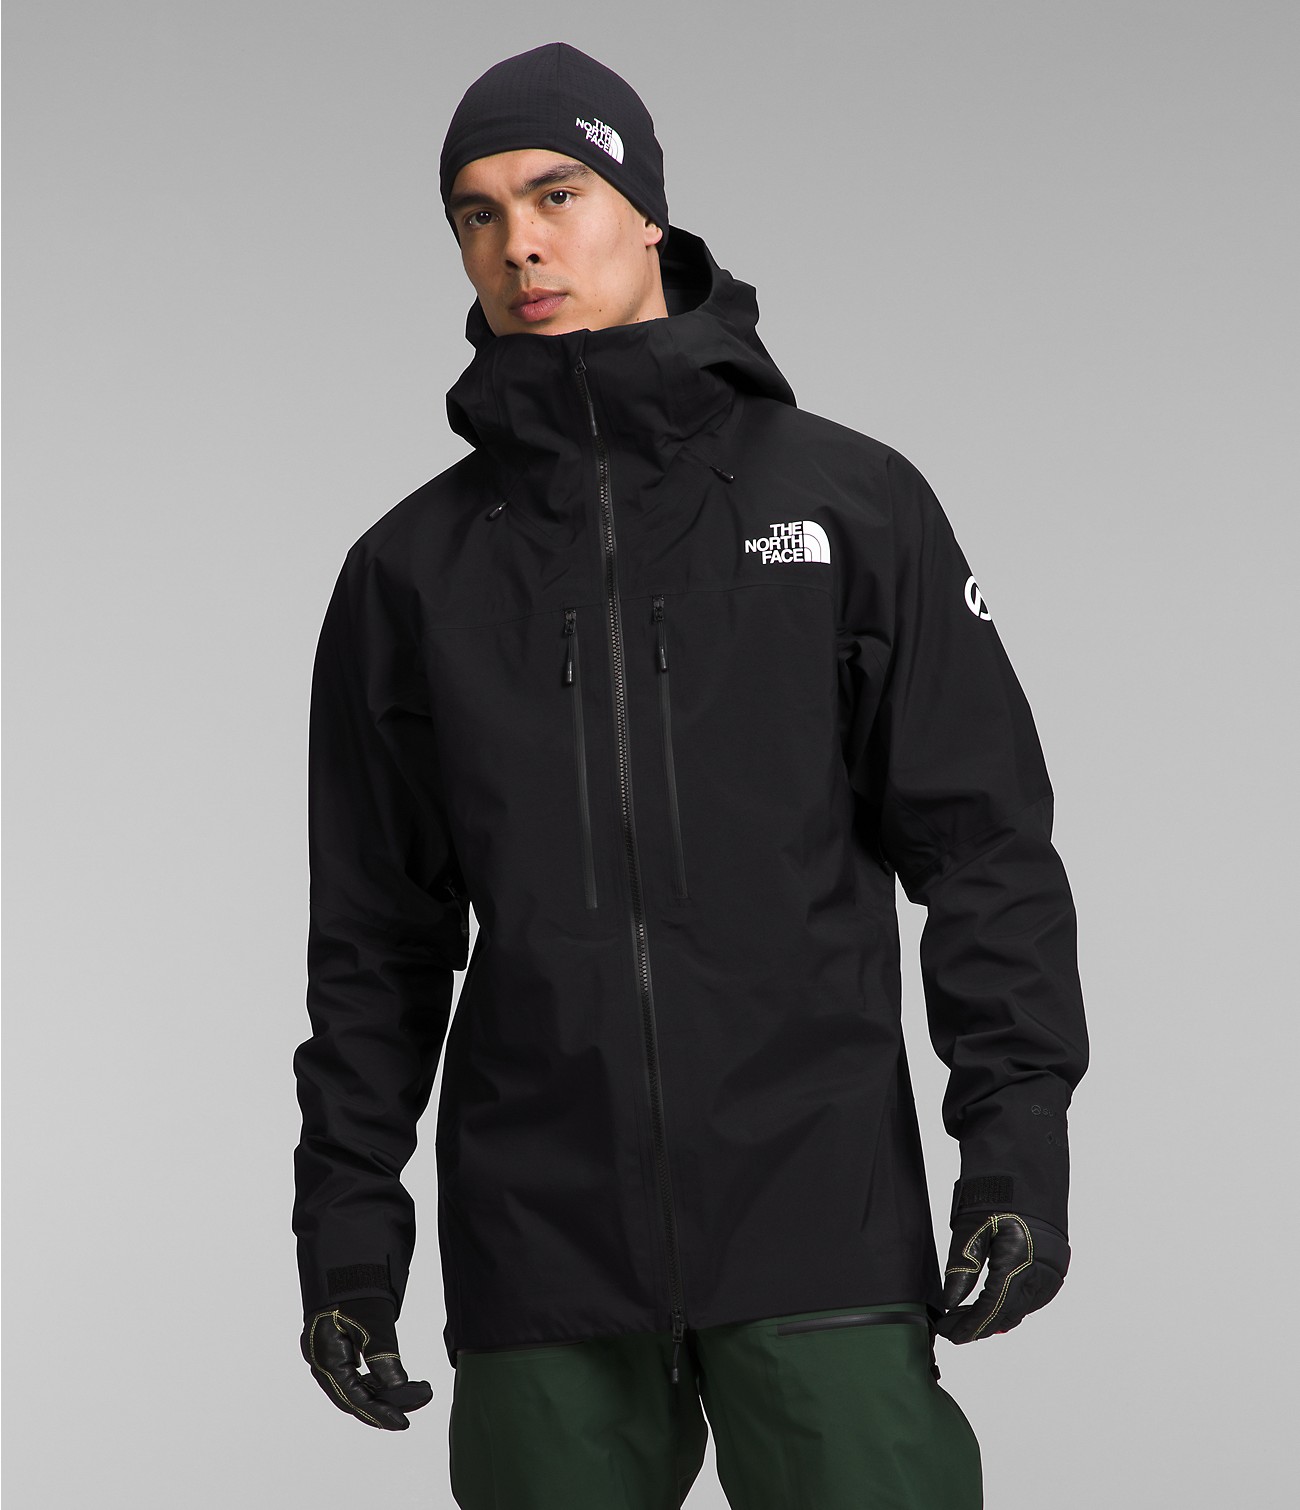 Men’s Summit Series Pumori GORE-TEX® Pro Jacket | The North Face